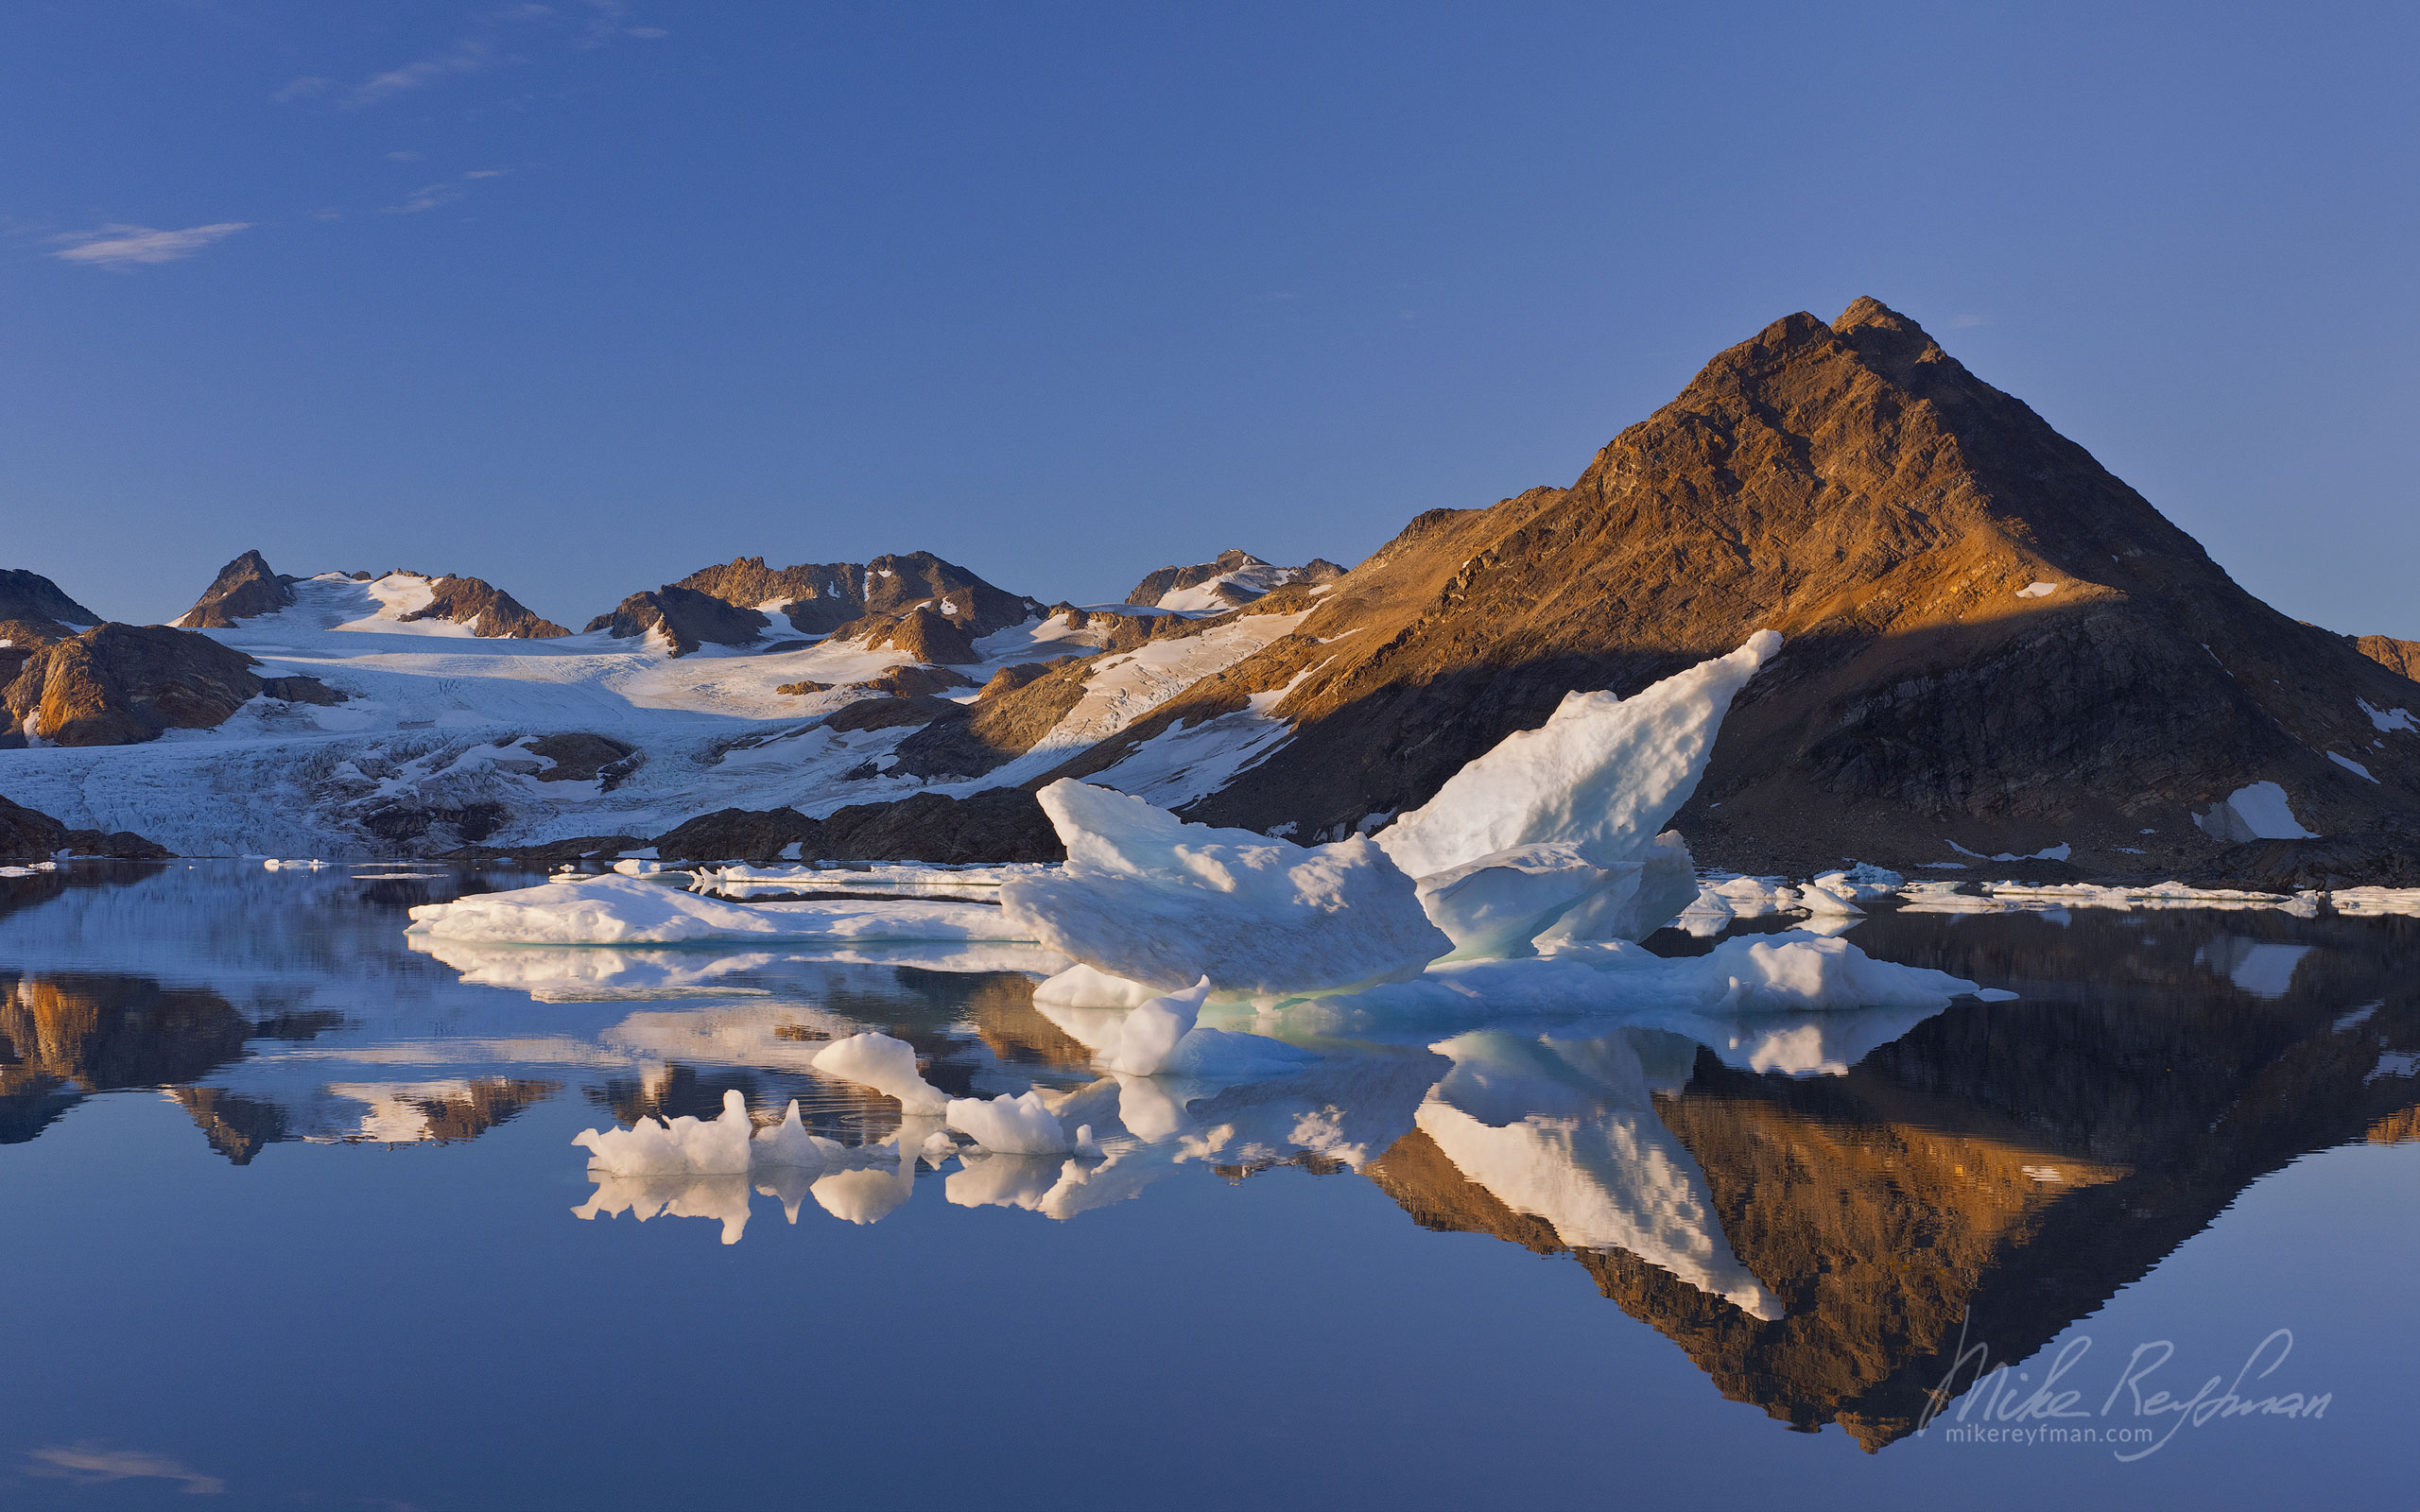 Tidewater Apusiaajik Glacier. Torsuut Tunoq Sound, Southeastern Greenland. 017-GR-KU_P3X4480 - Kulusuk island, Ammassalik Fjord & Torsuut Tunoq Sound. Southeastern Greenland - Mike Reyfman Photography